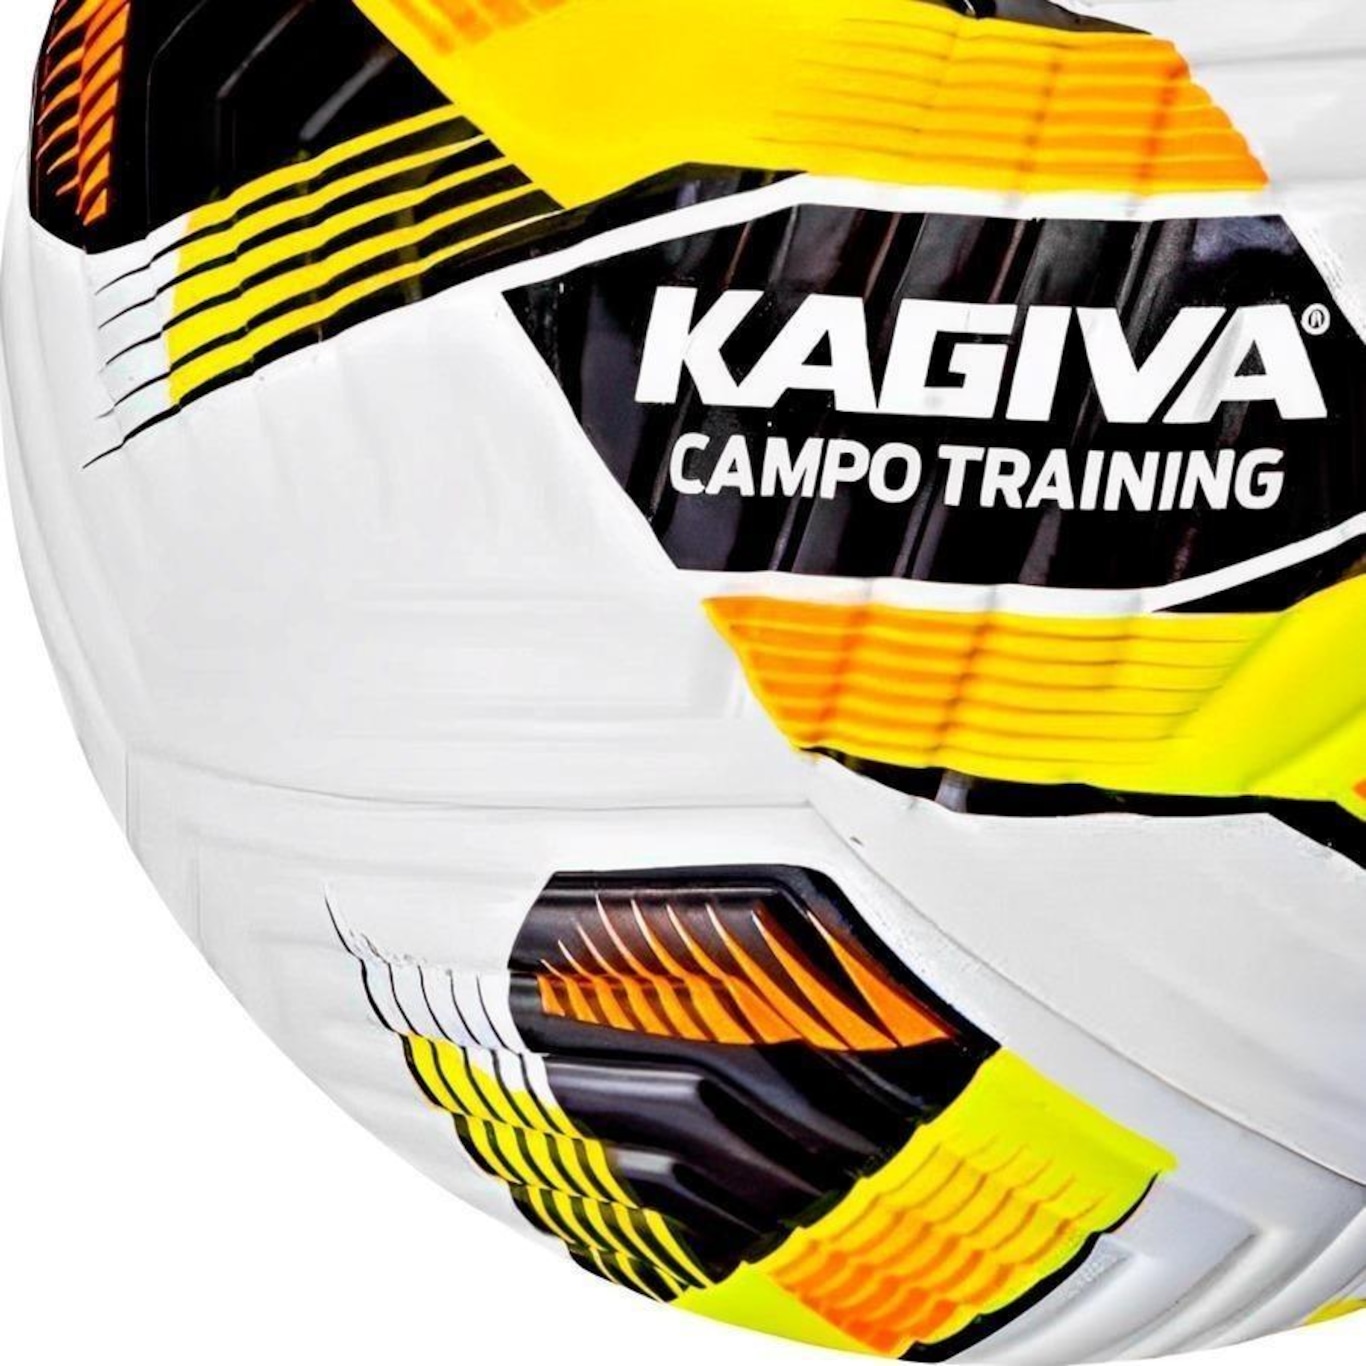 Bola Para Campo C11 Training 4 Kagiva Cor Branco, Amarelo E Preto